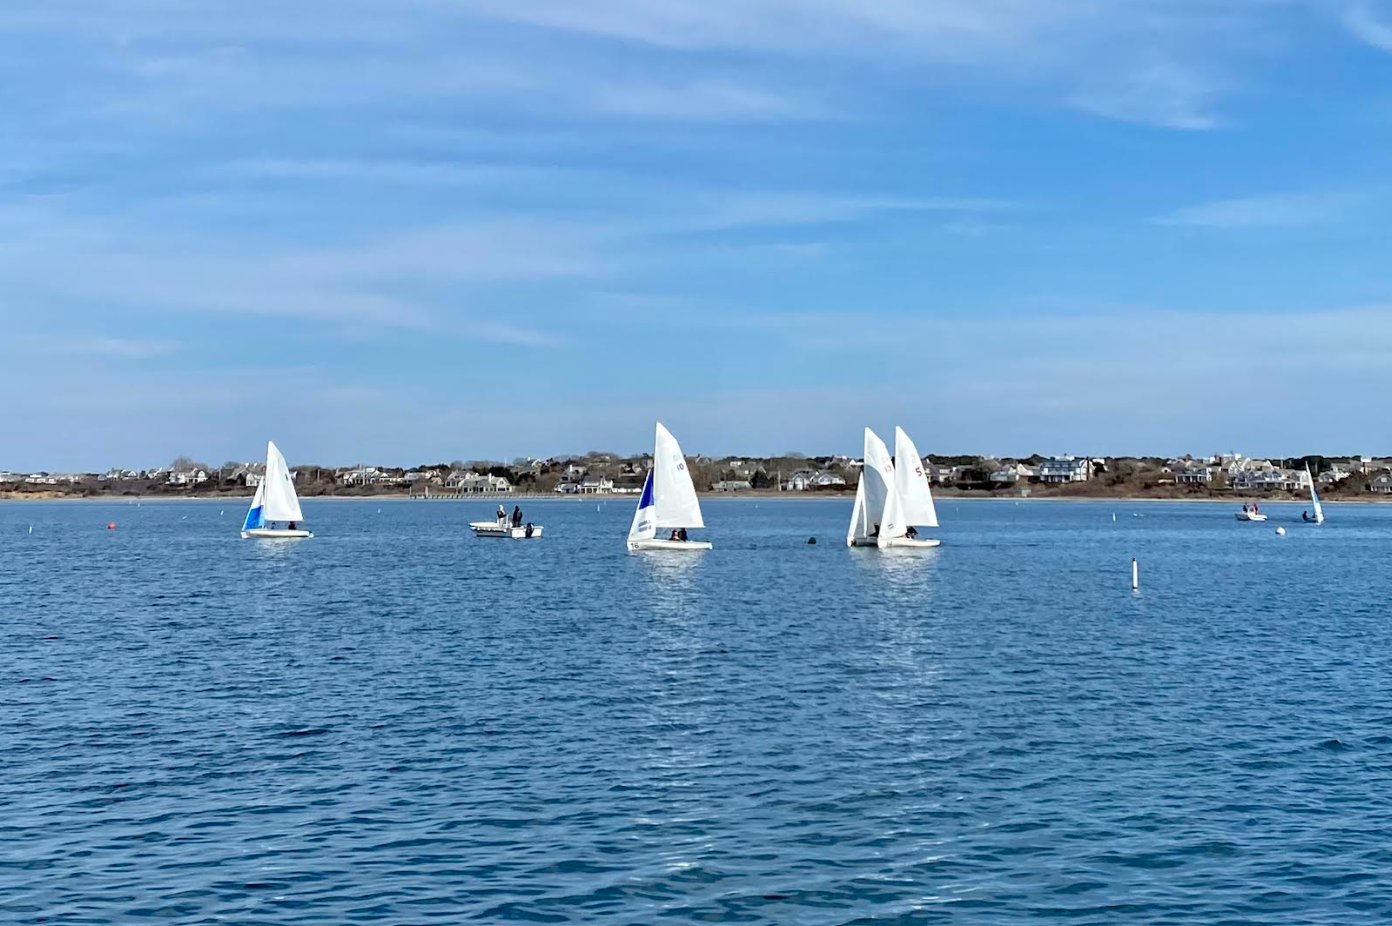 The Nantucket High School sailing team took to the water last week in their fleet of 420s.